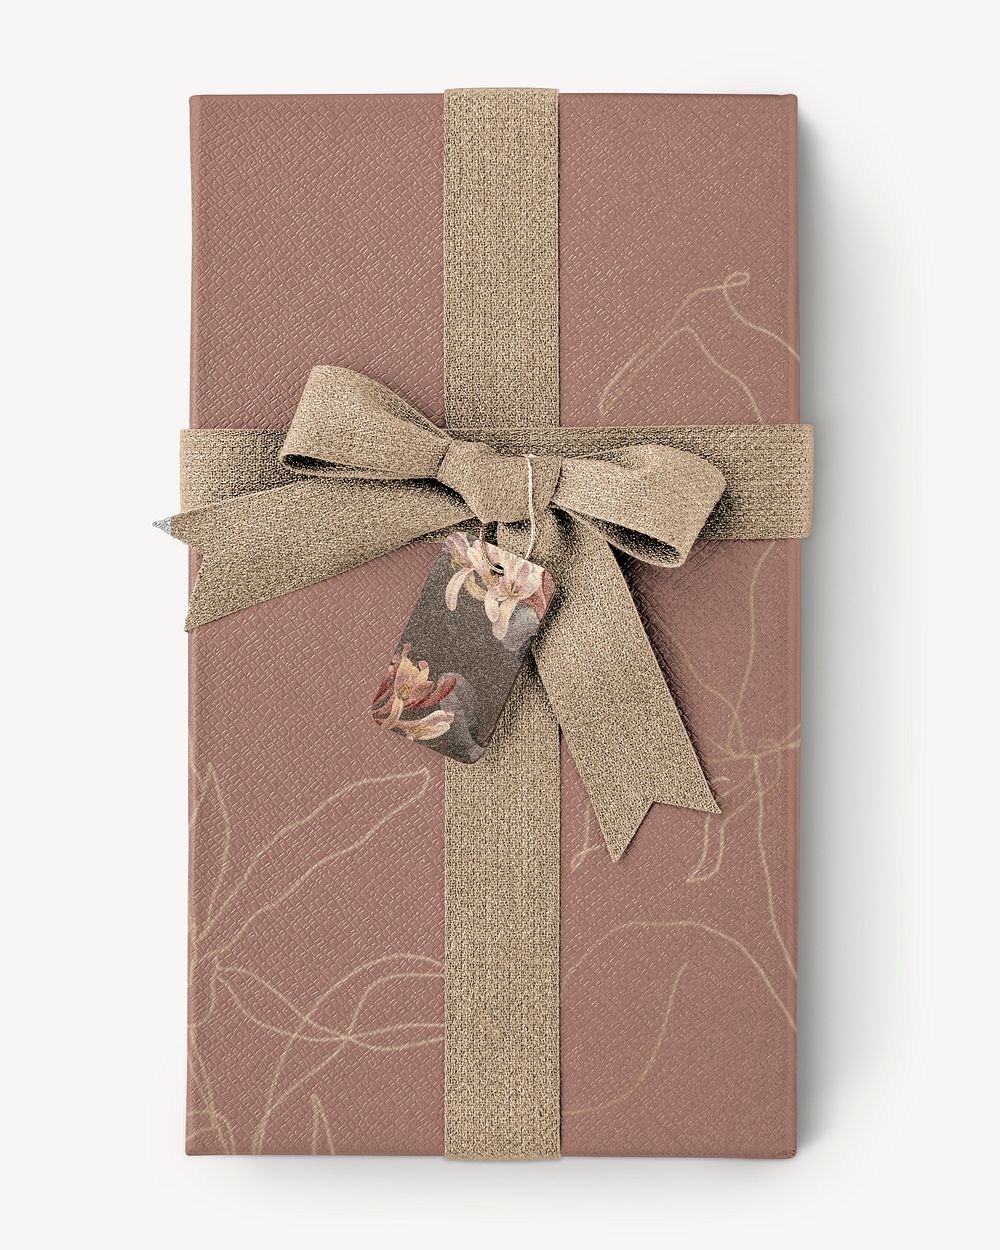 Birthday gift box, floral earth tone design